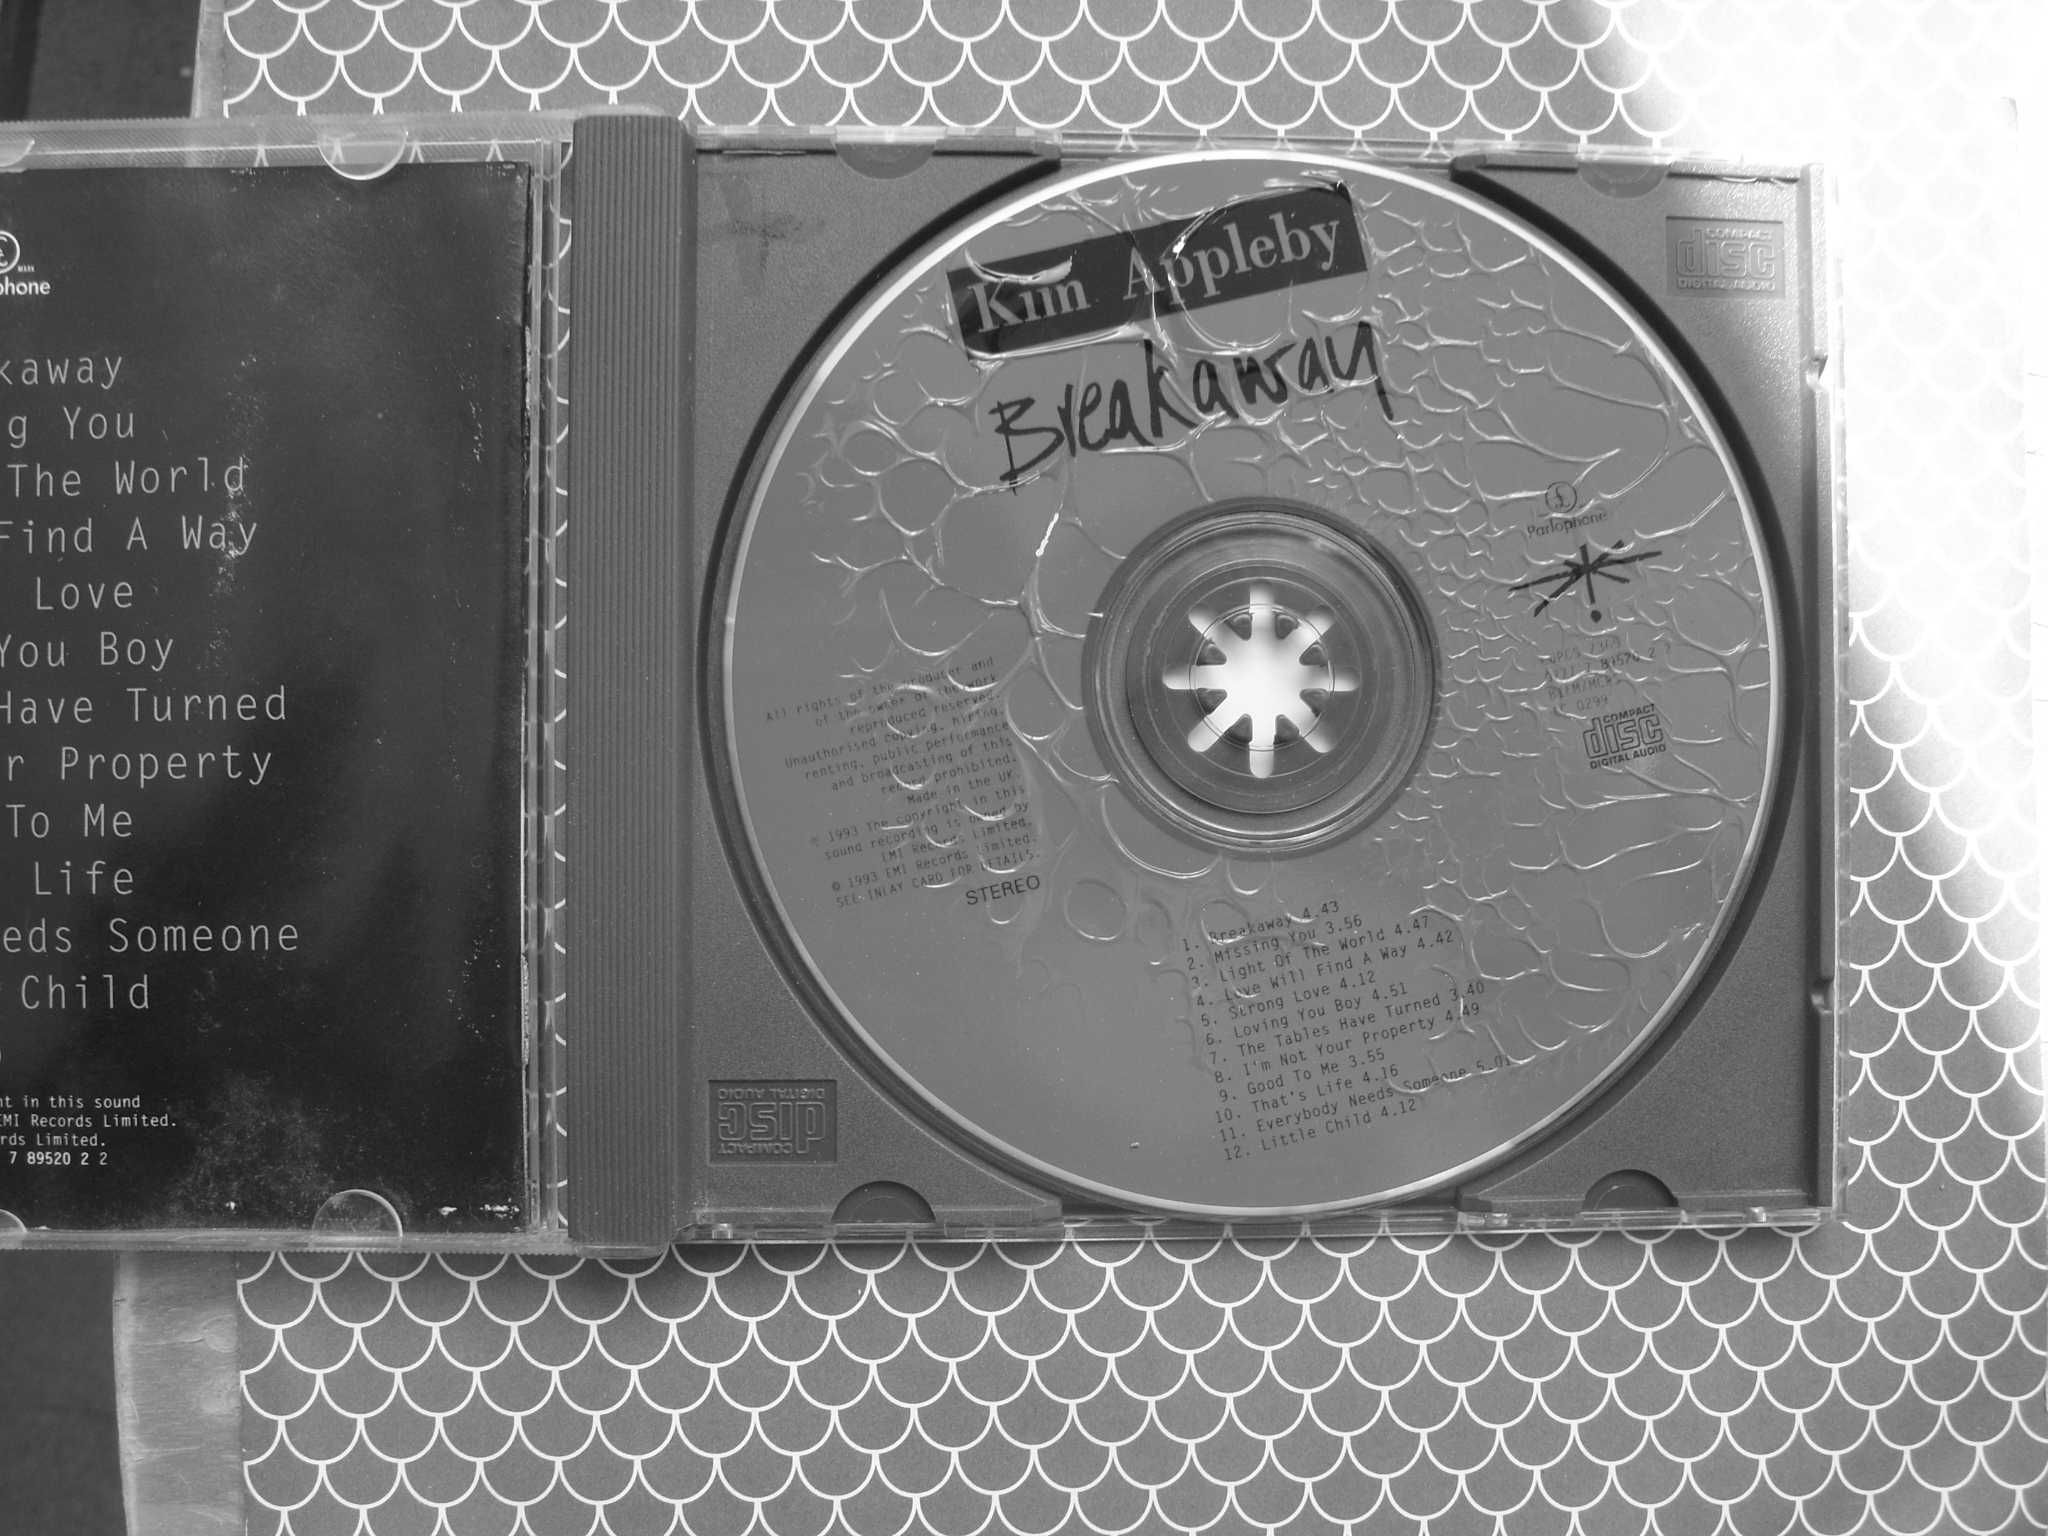 Plyta CD; KIM APPLEBY--BREAKAWAY ; 1993 rok.